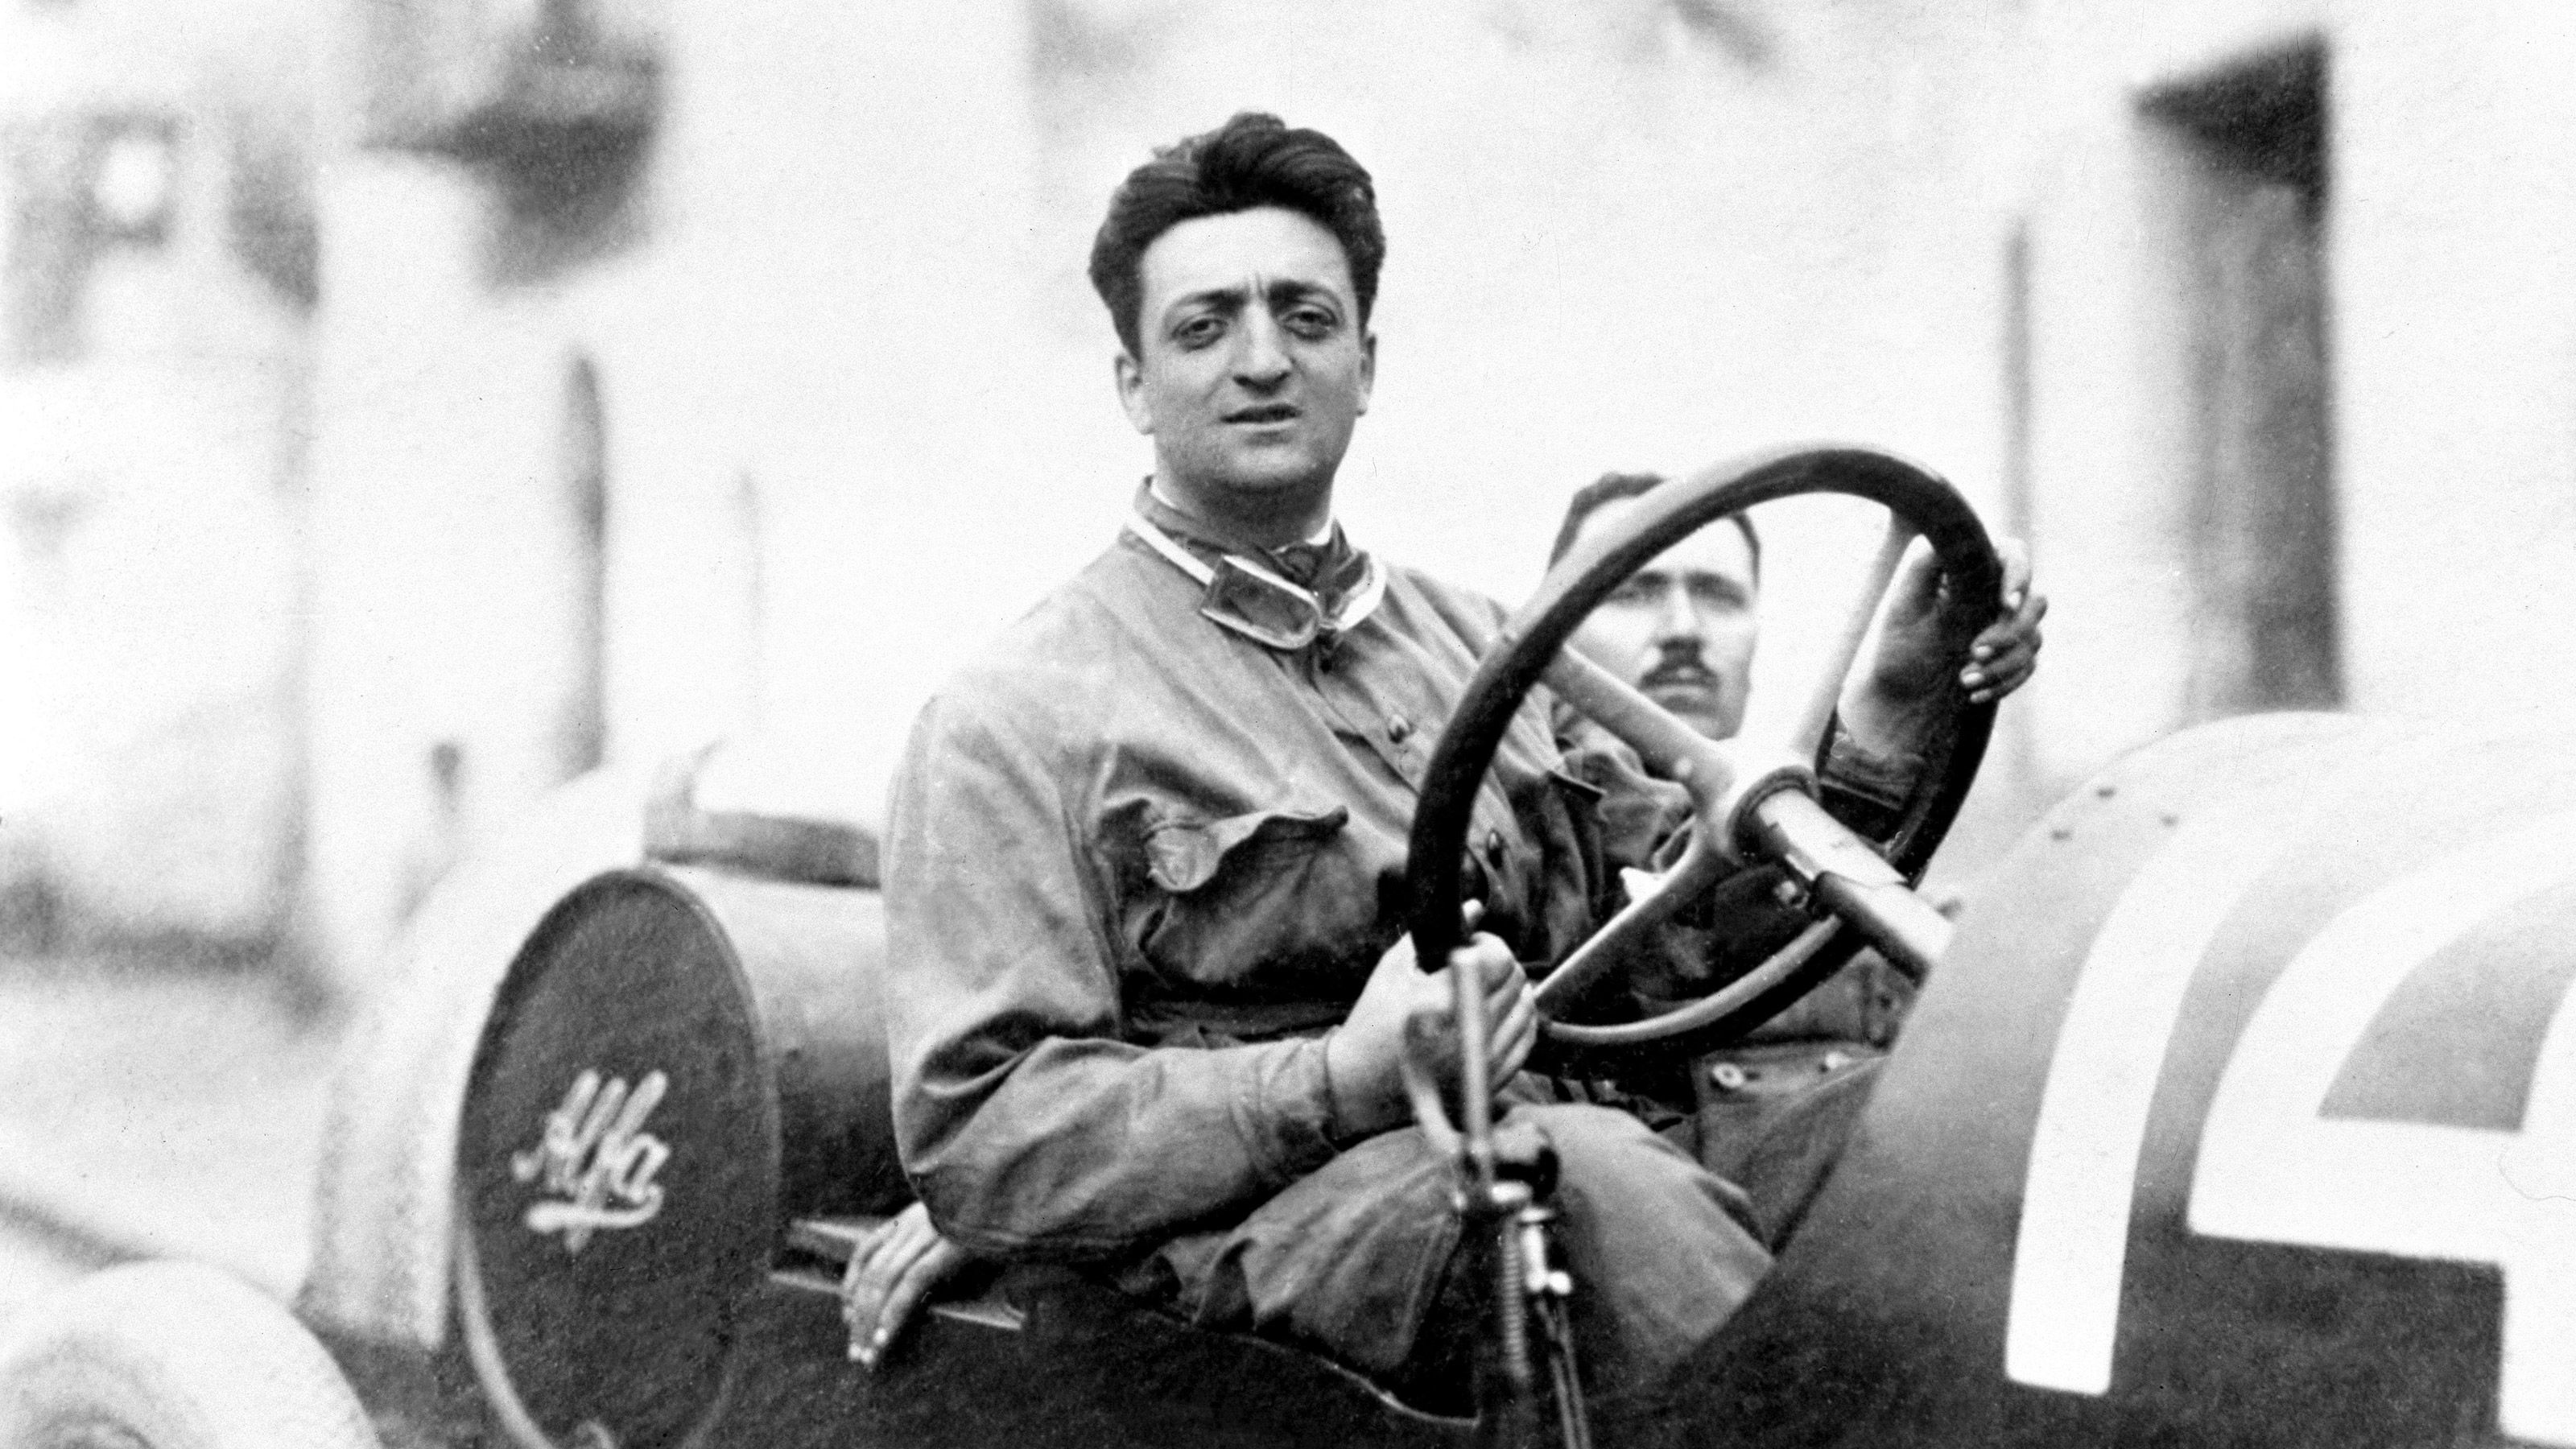 Enzo Ferrari fought in WW!